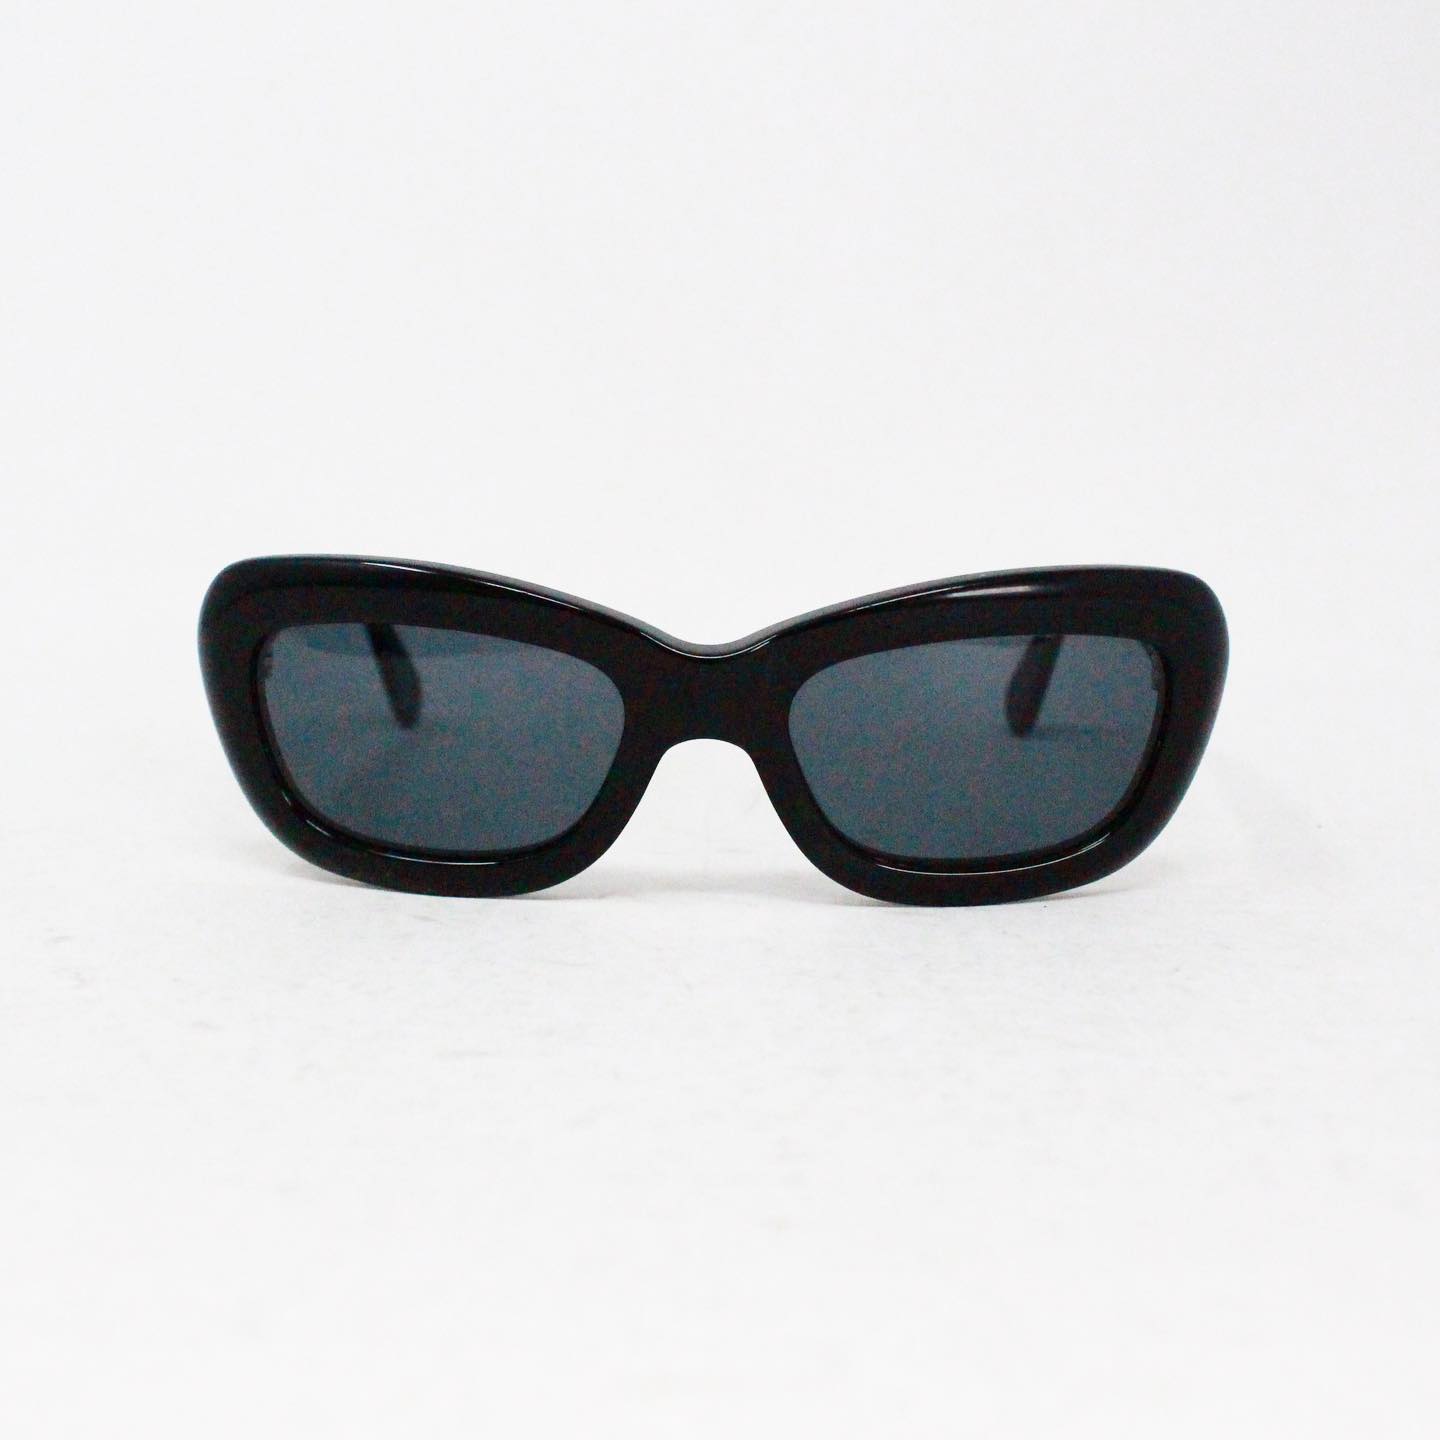 AUTHENTIC Pre Owned BVLGARI 41371 Black Frame Sunglasses 7 1